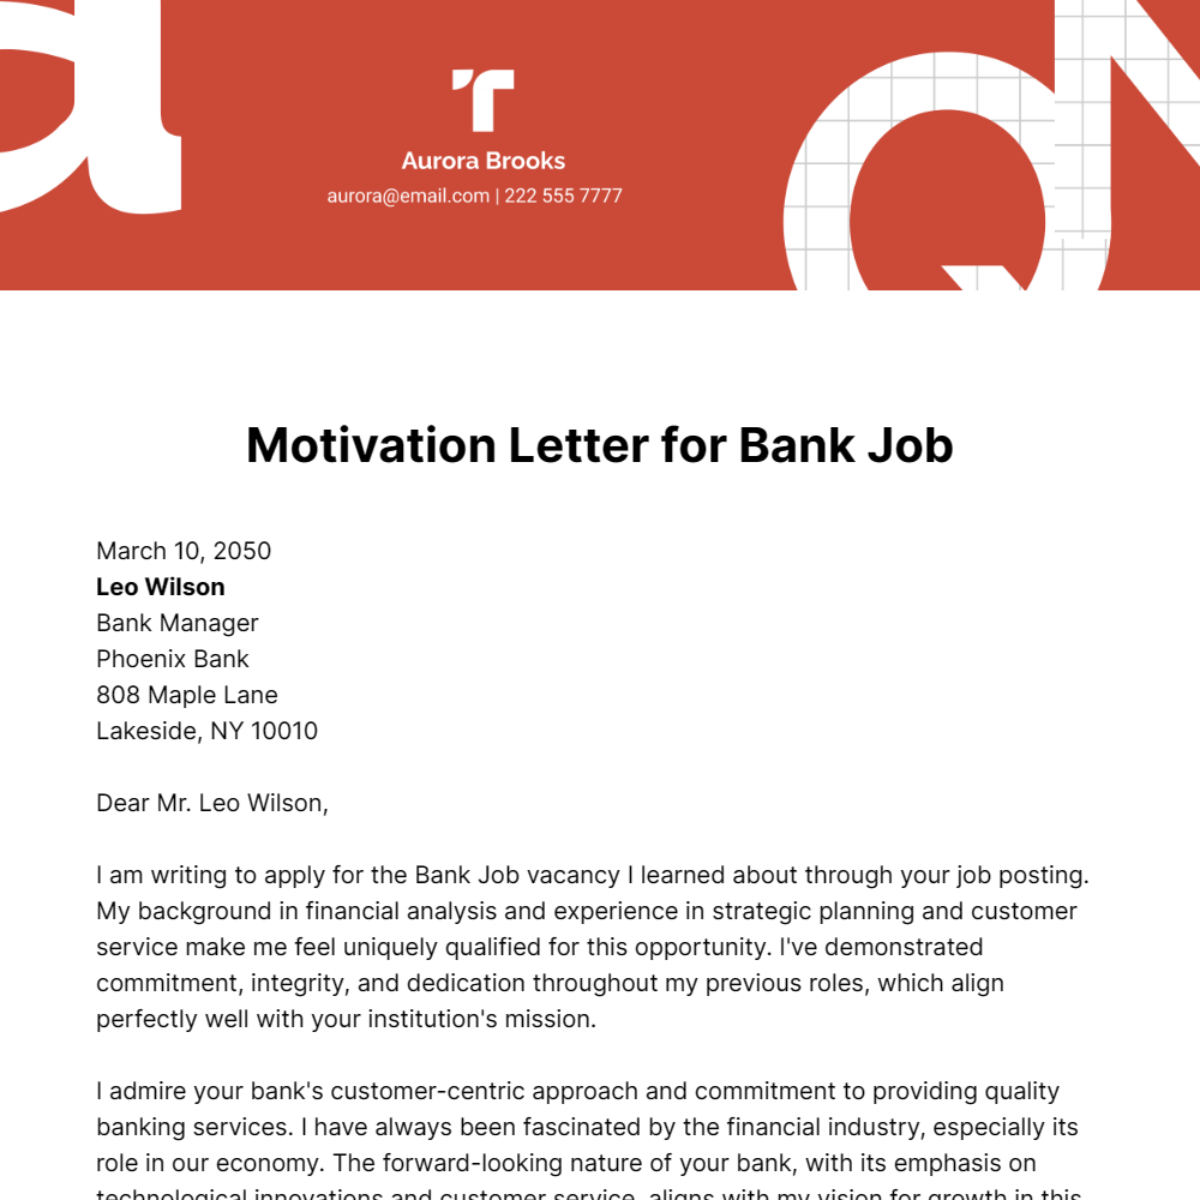 Motivation Letter for Bank Job Template